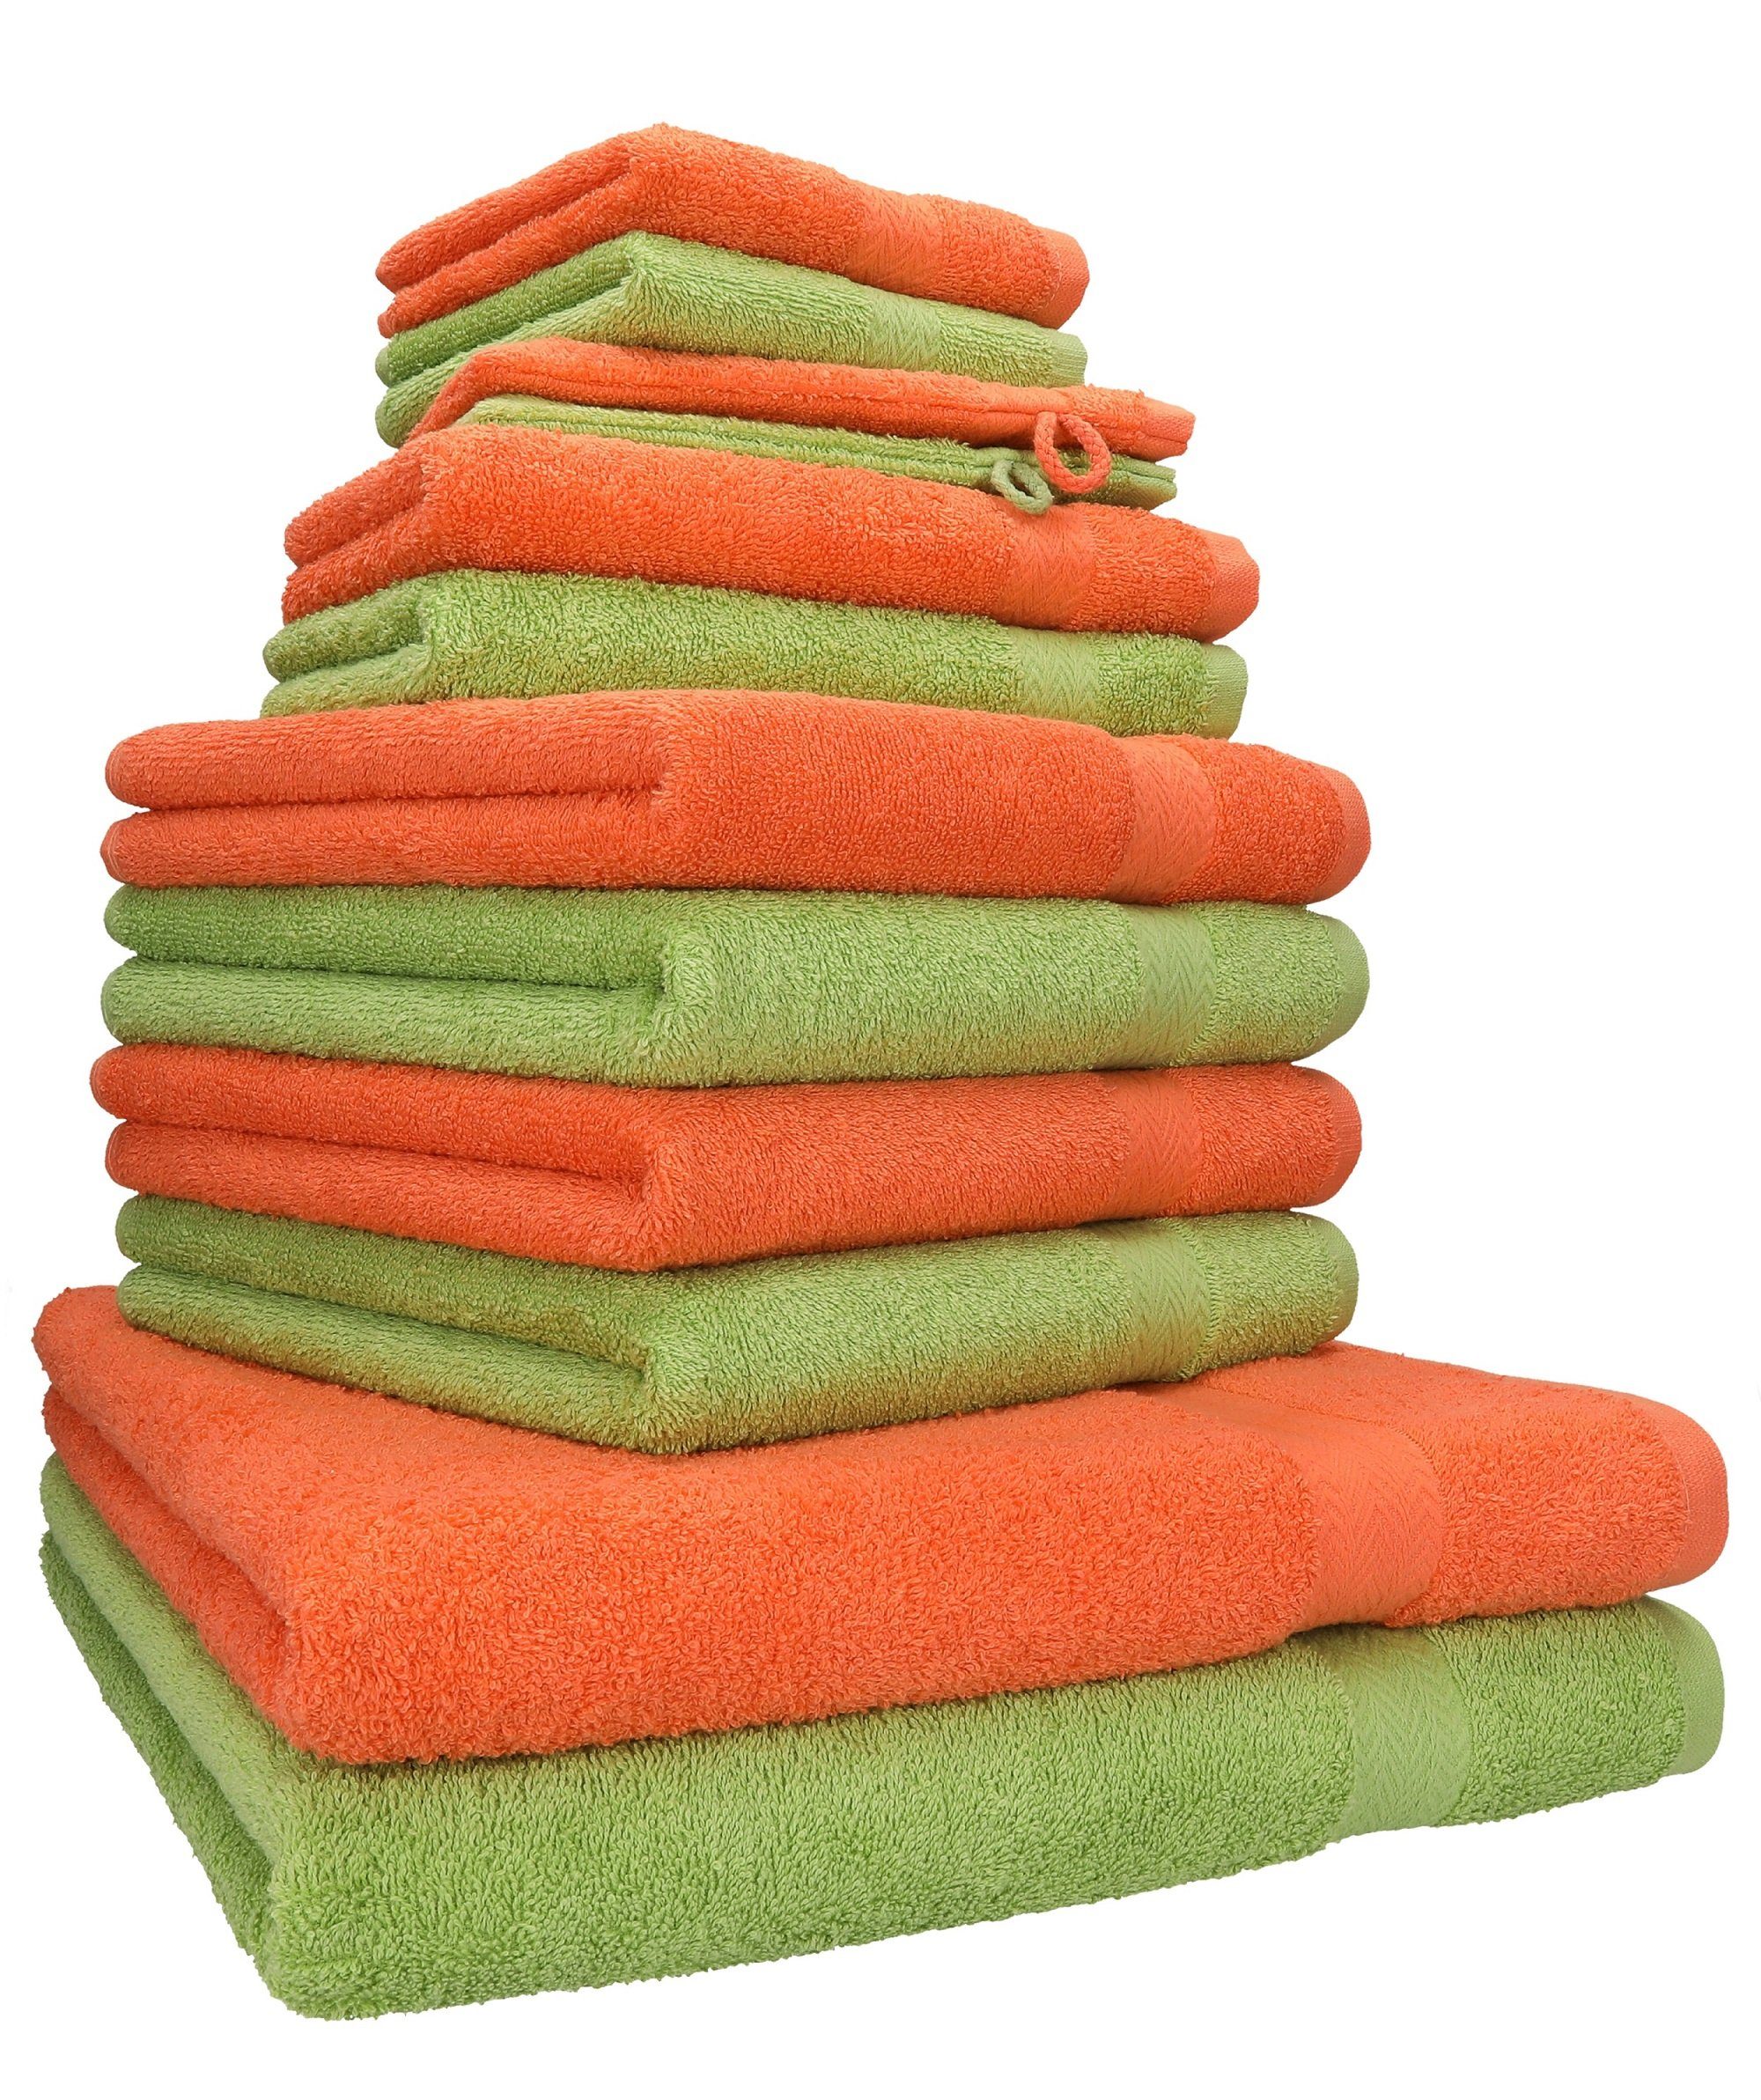 Betz Handtuch Set 12-TLG. Handtuch Set Premium 100% Baumwolle 2 Duschtücher 4 Handtücher 2 Gästetücher 2 Seiftücher 2 Waschhandschuhe Farbe blutorange/avocadogrün, 100% Baumwolle, (12-tlg)